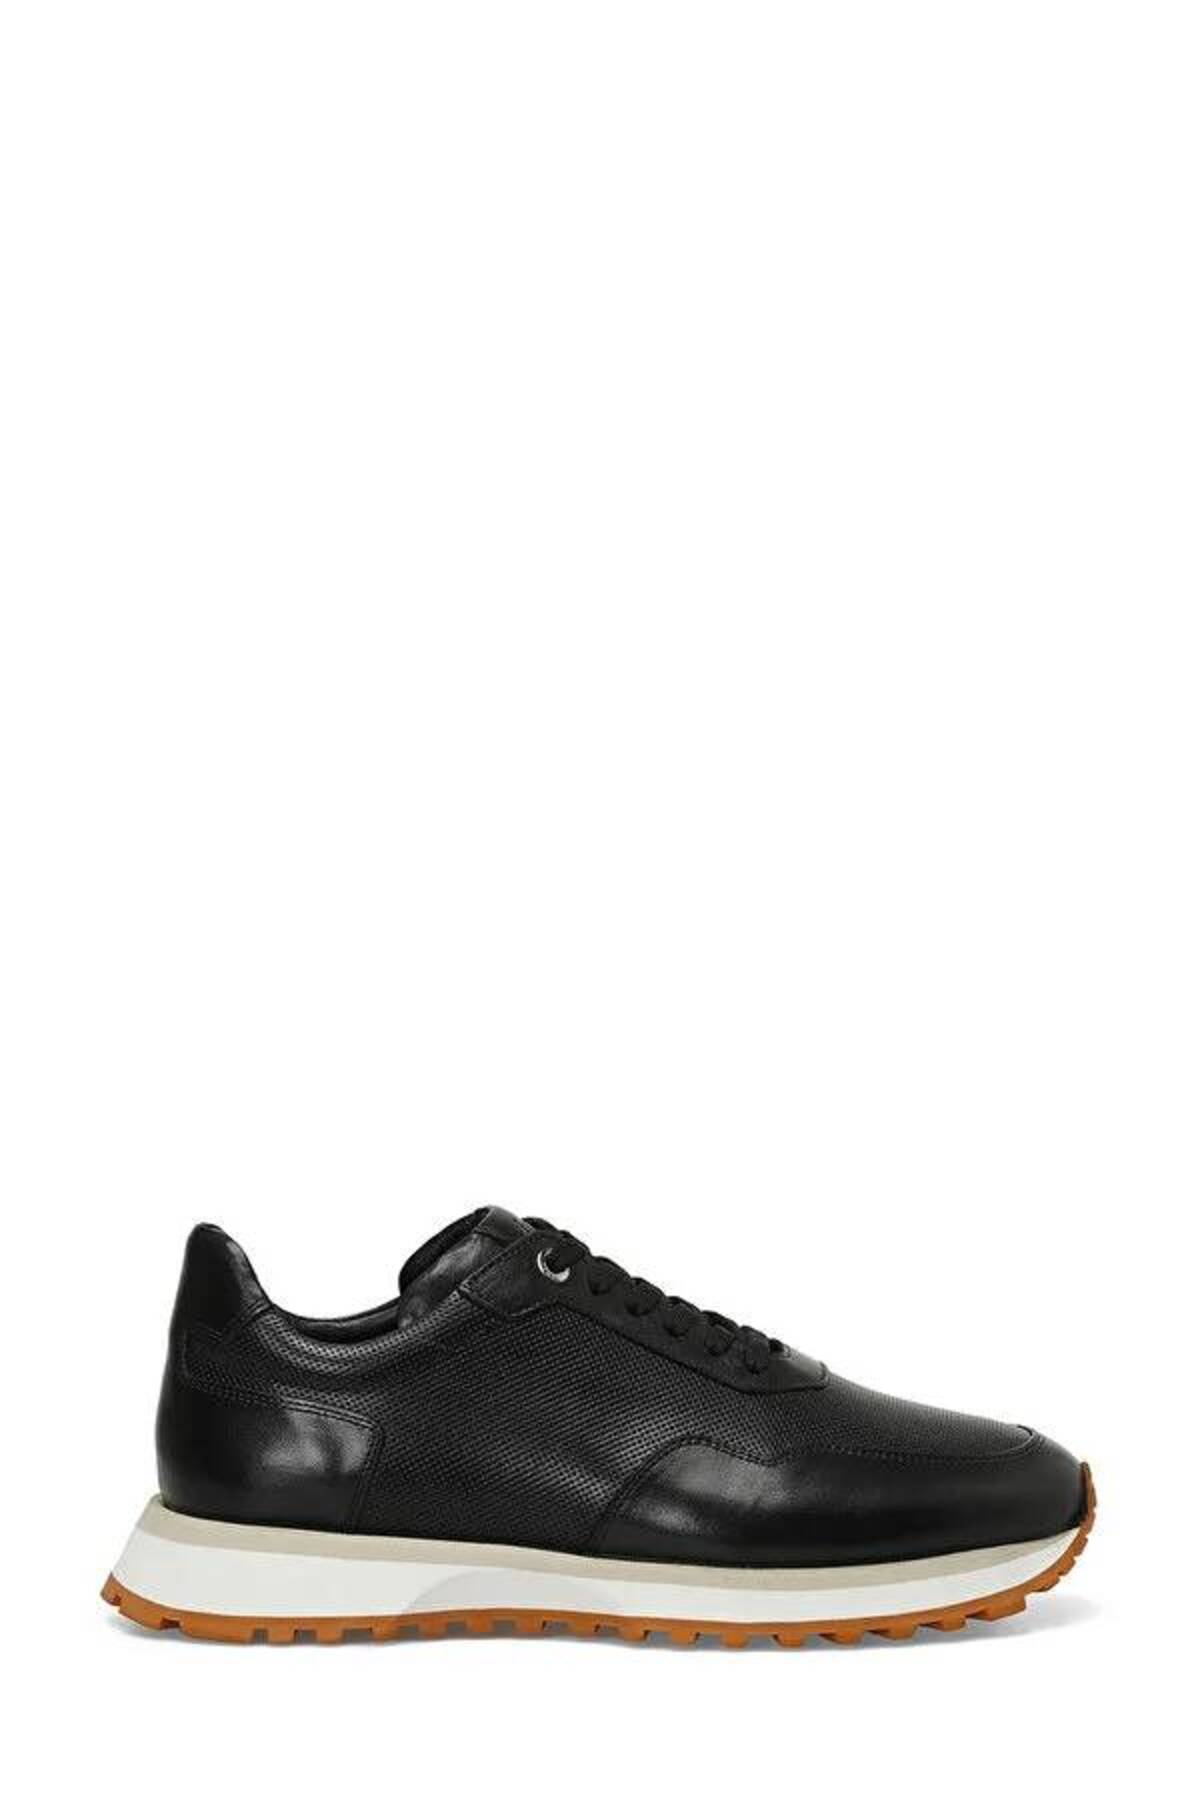 İnci 101545146 Mibya 4fx Pearl Men's Sports Shoes A101545146 Black